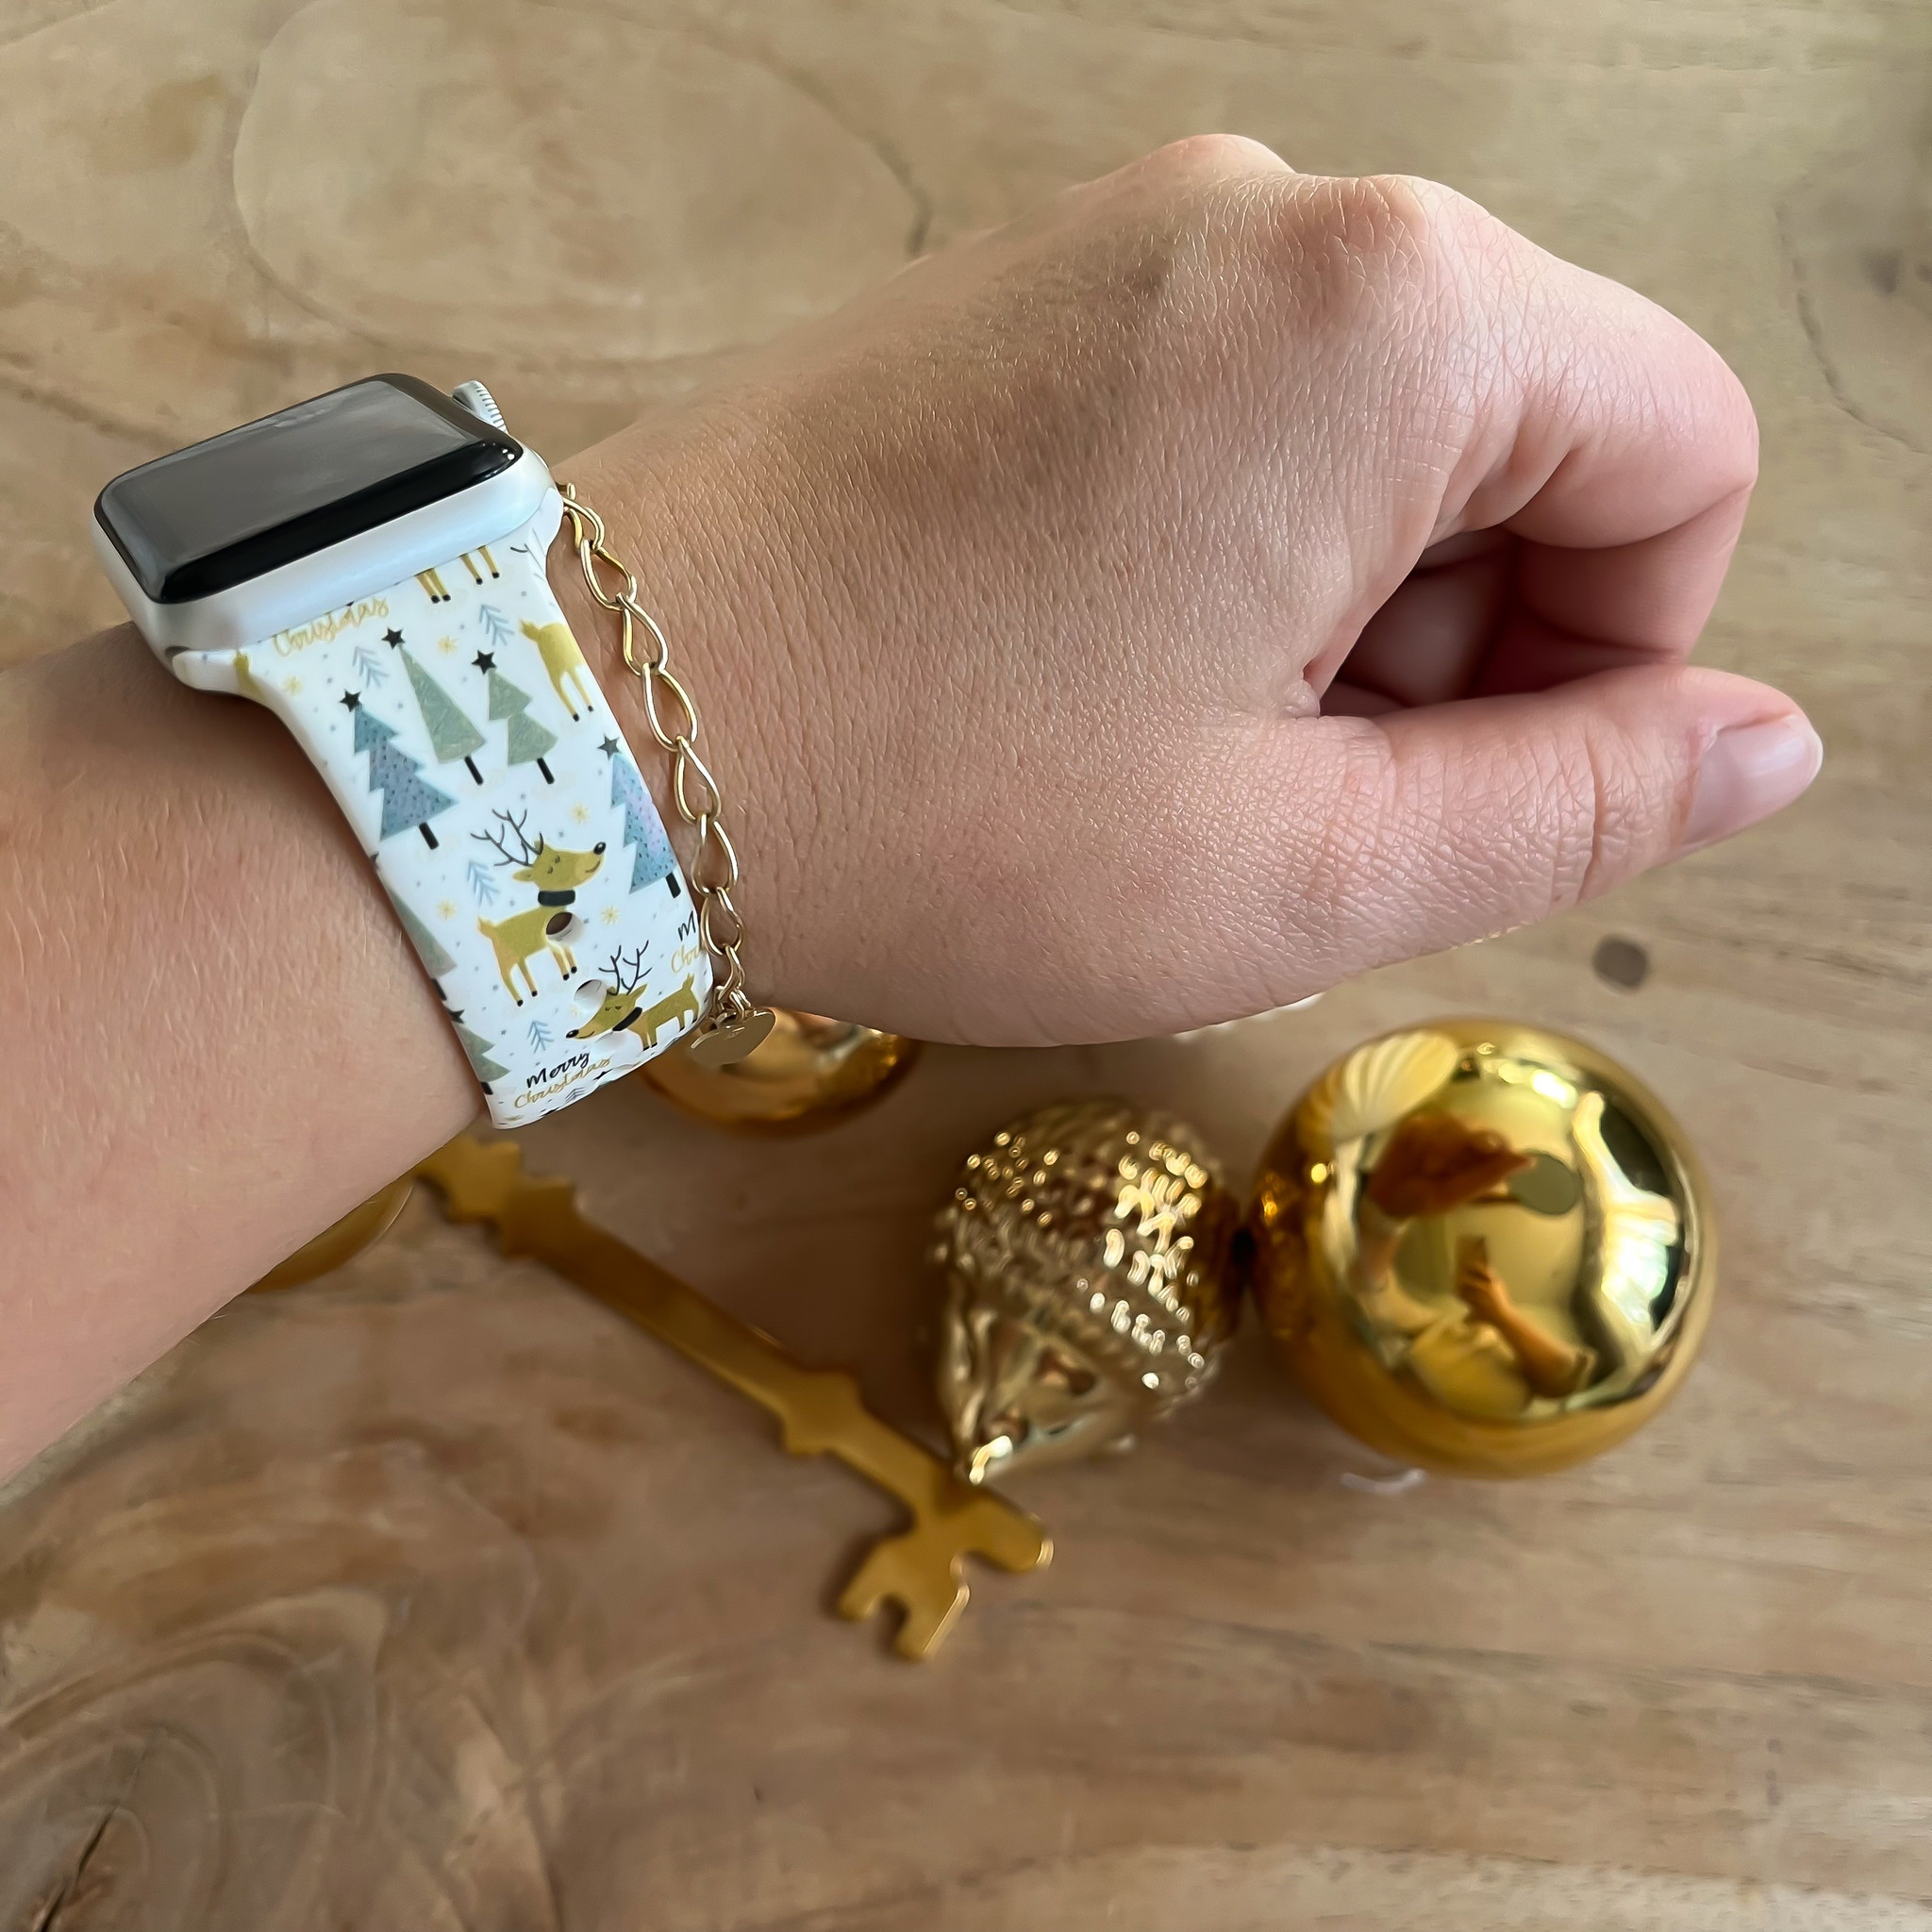 Bracelet sport imprimé Apple Watch - arbre de Noël blanc